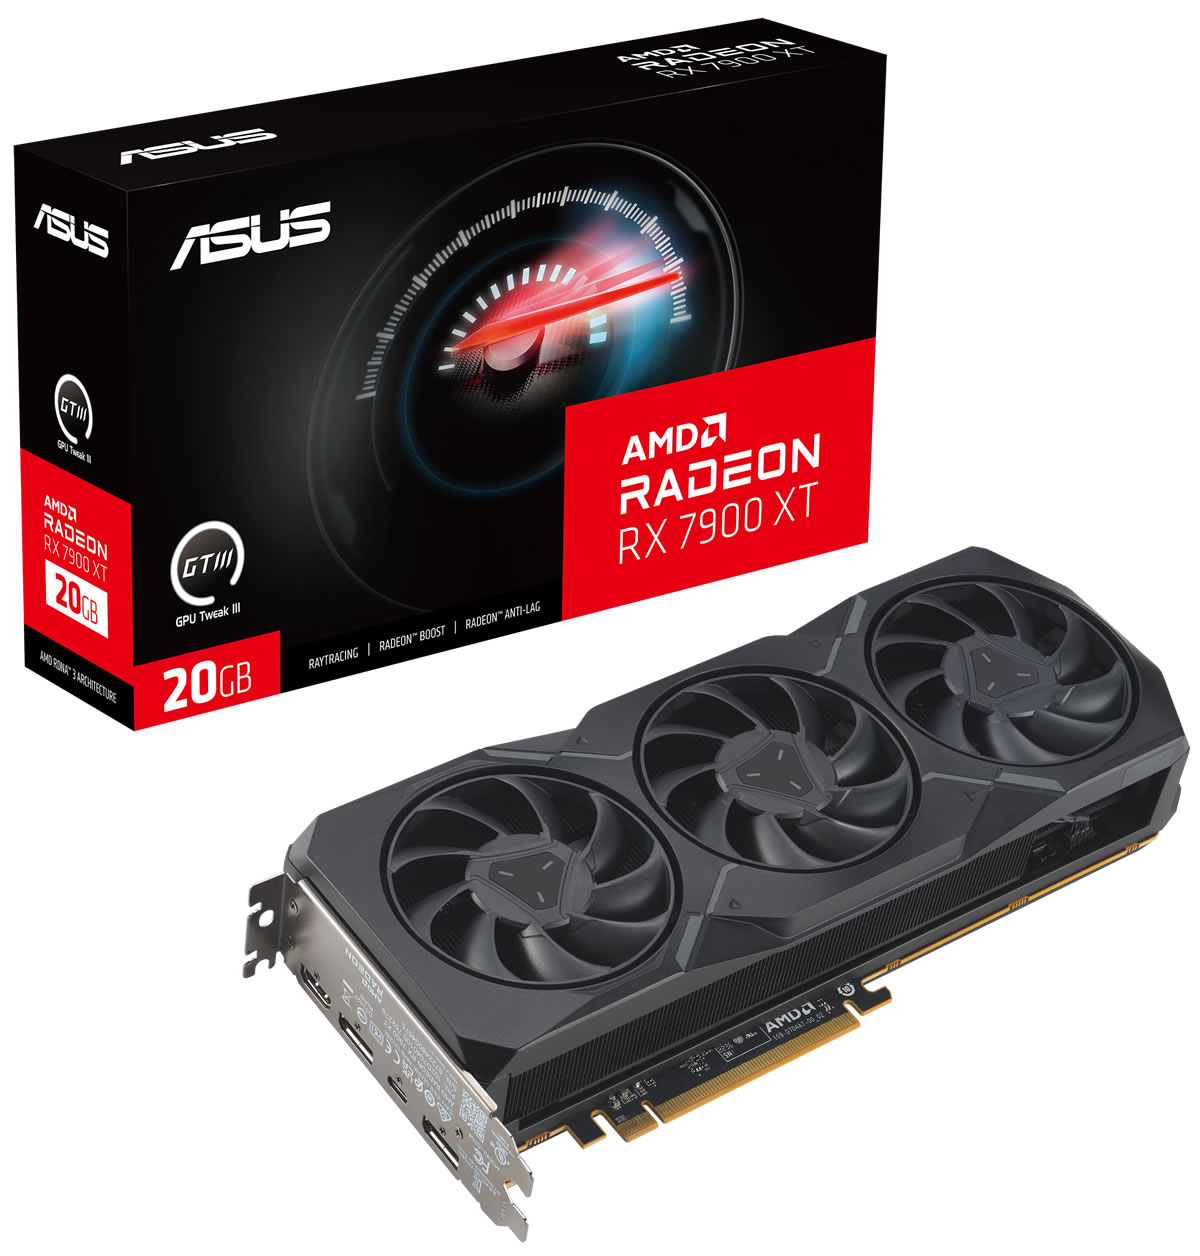 Asus Radeon RX 7900 XT Gaming 20GB GDDR6 PCI-Express Graphics Card